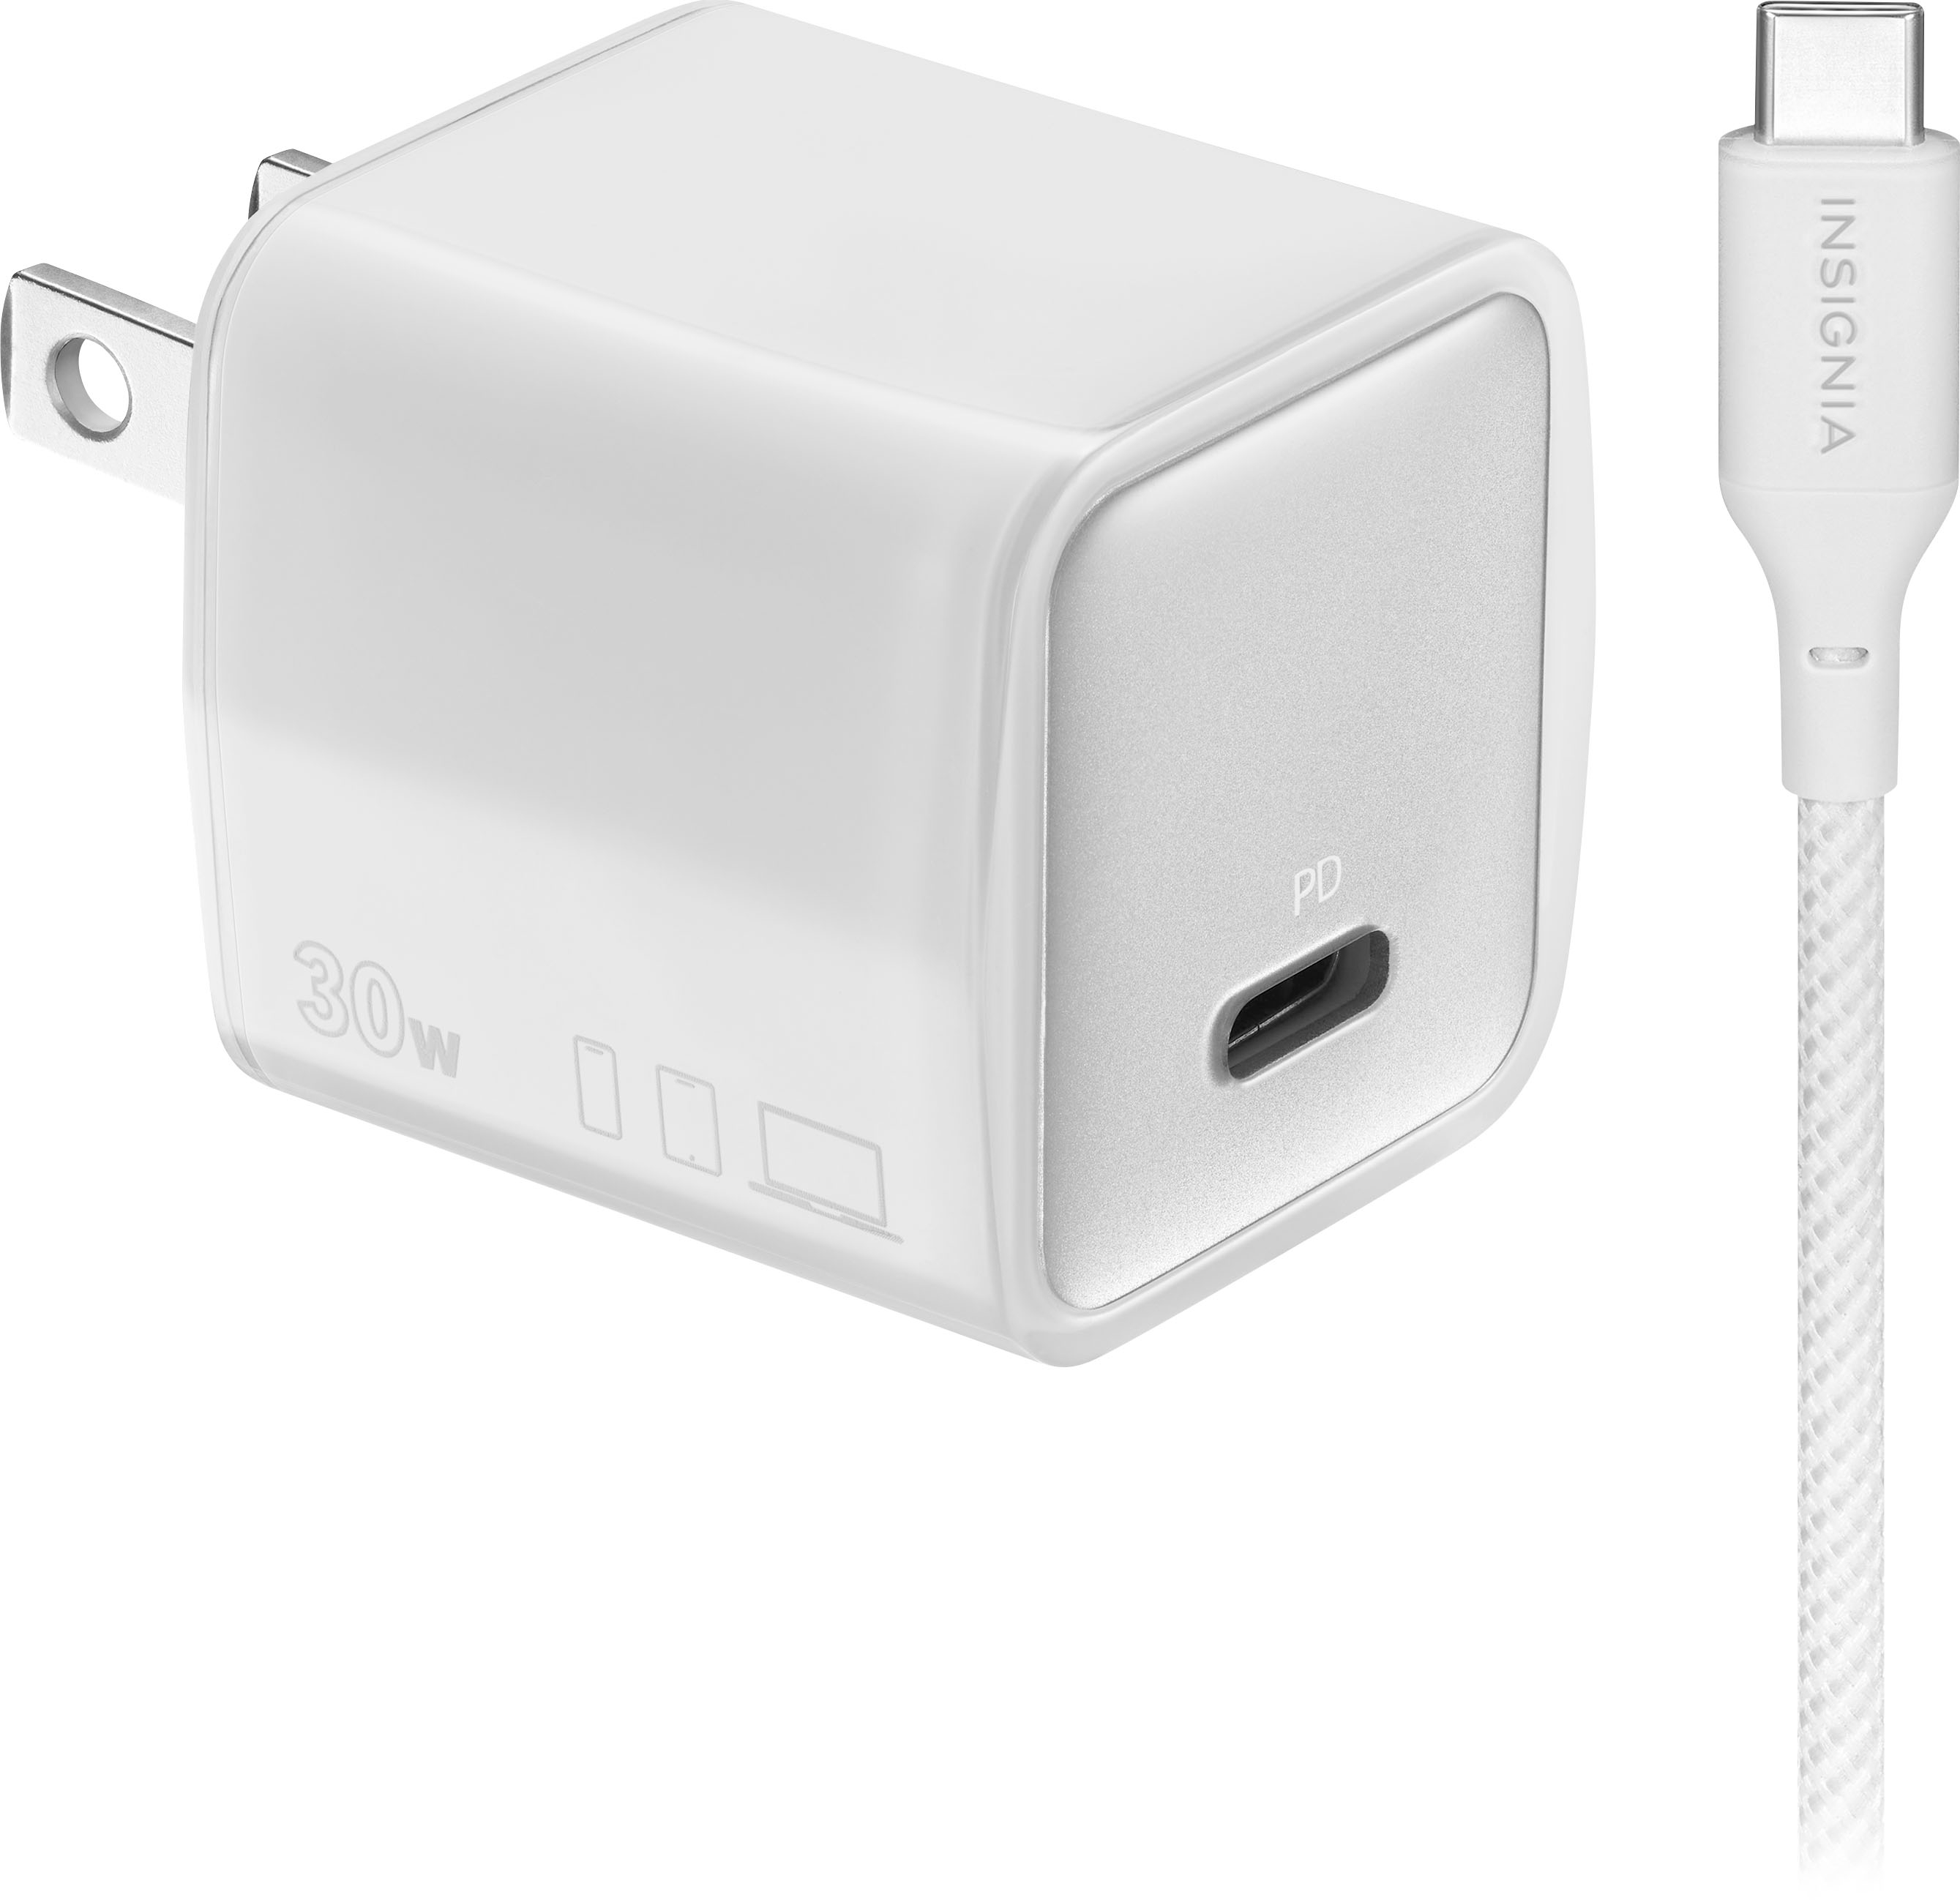 Cargador Apple USB-C 20W + Cable USB-C de 2m - Pack original Apple iPhone  15 - Spain